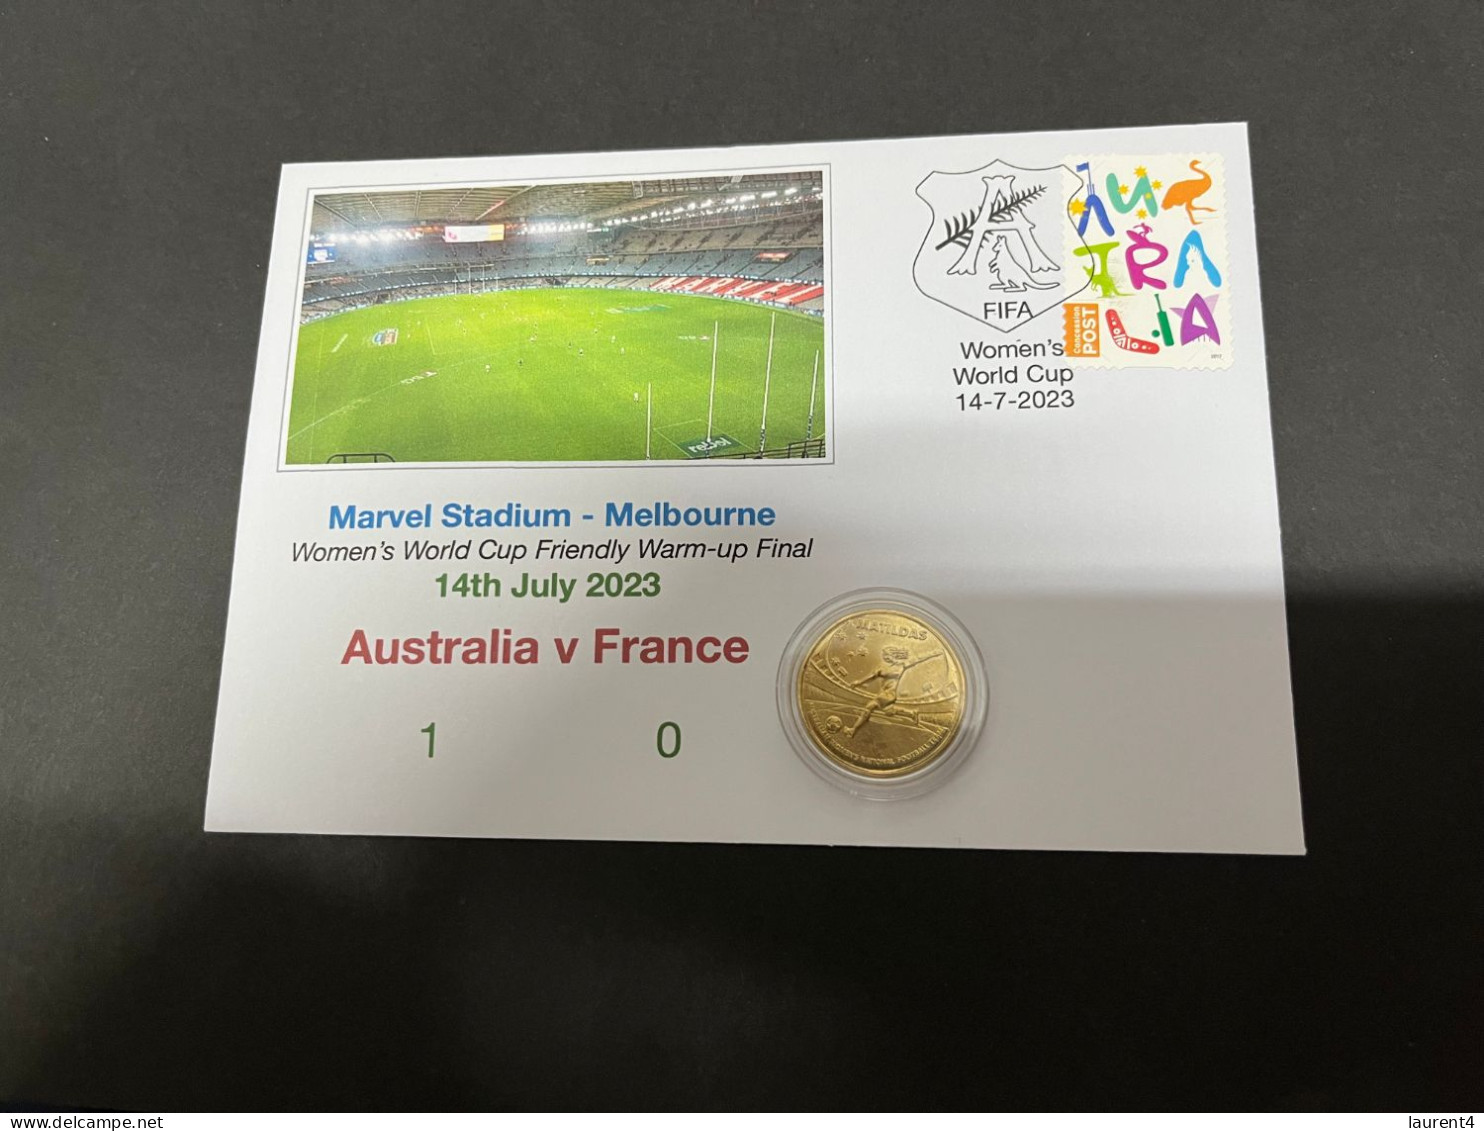 14-7-2023 (2 S 10 A) Women's Football World Cup ($1.00 Matildas Coin) FIFA Friendly Final - Australia (1) France (0) - Dollar